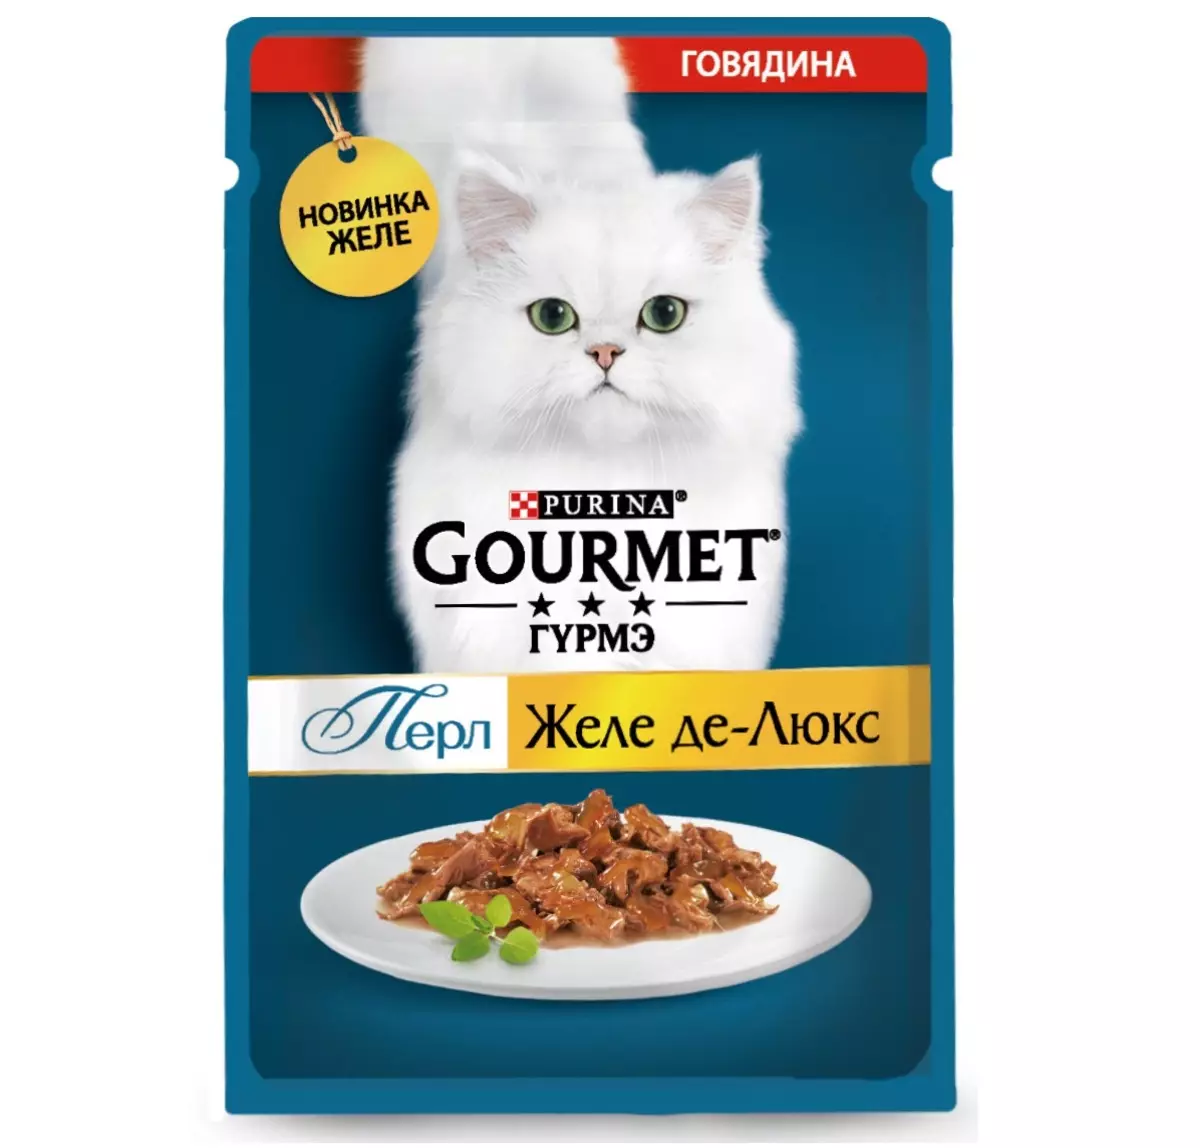 Gourmet: อาหารแมวและลูกแมว Purina, Pates เปียกและอาหารกระป๋องอื่น ๆ องค์ประกอบของพวกเขาความคิดเห็น 22711_31